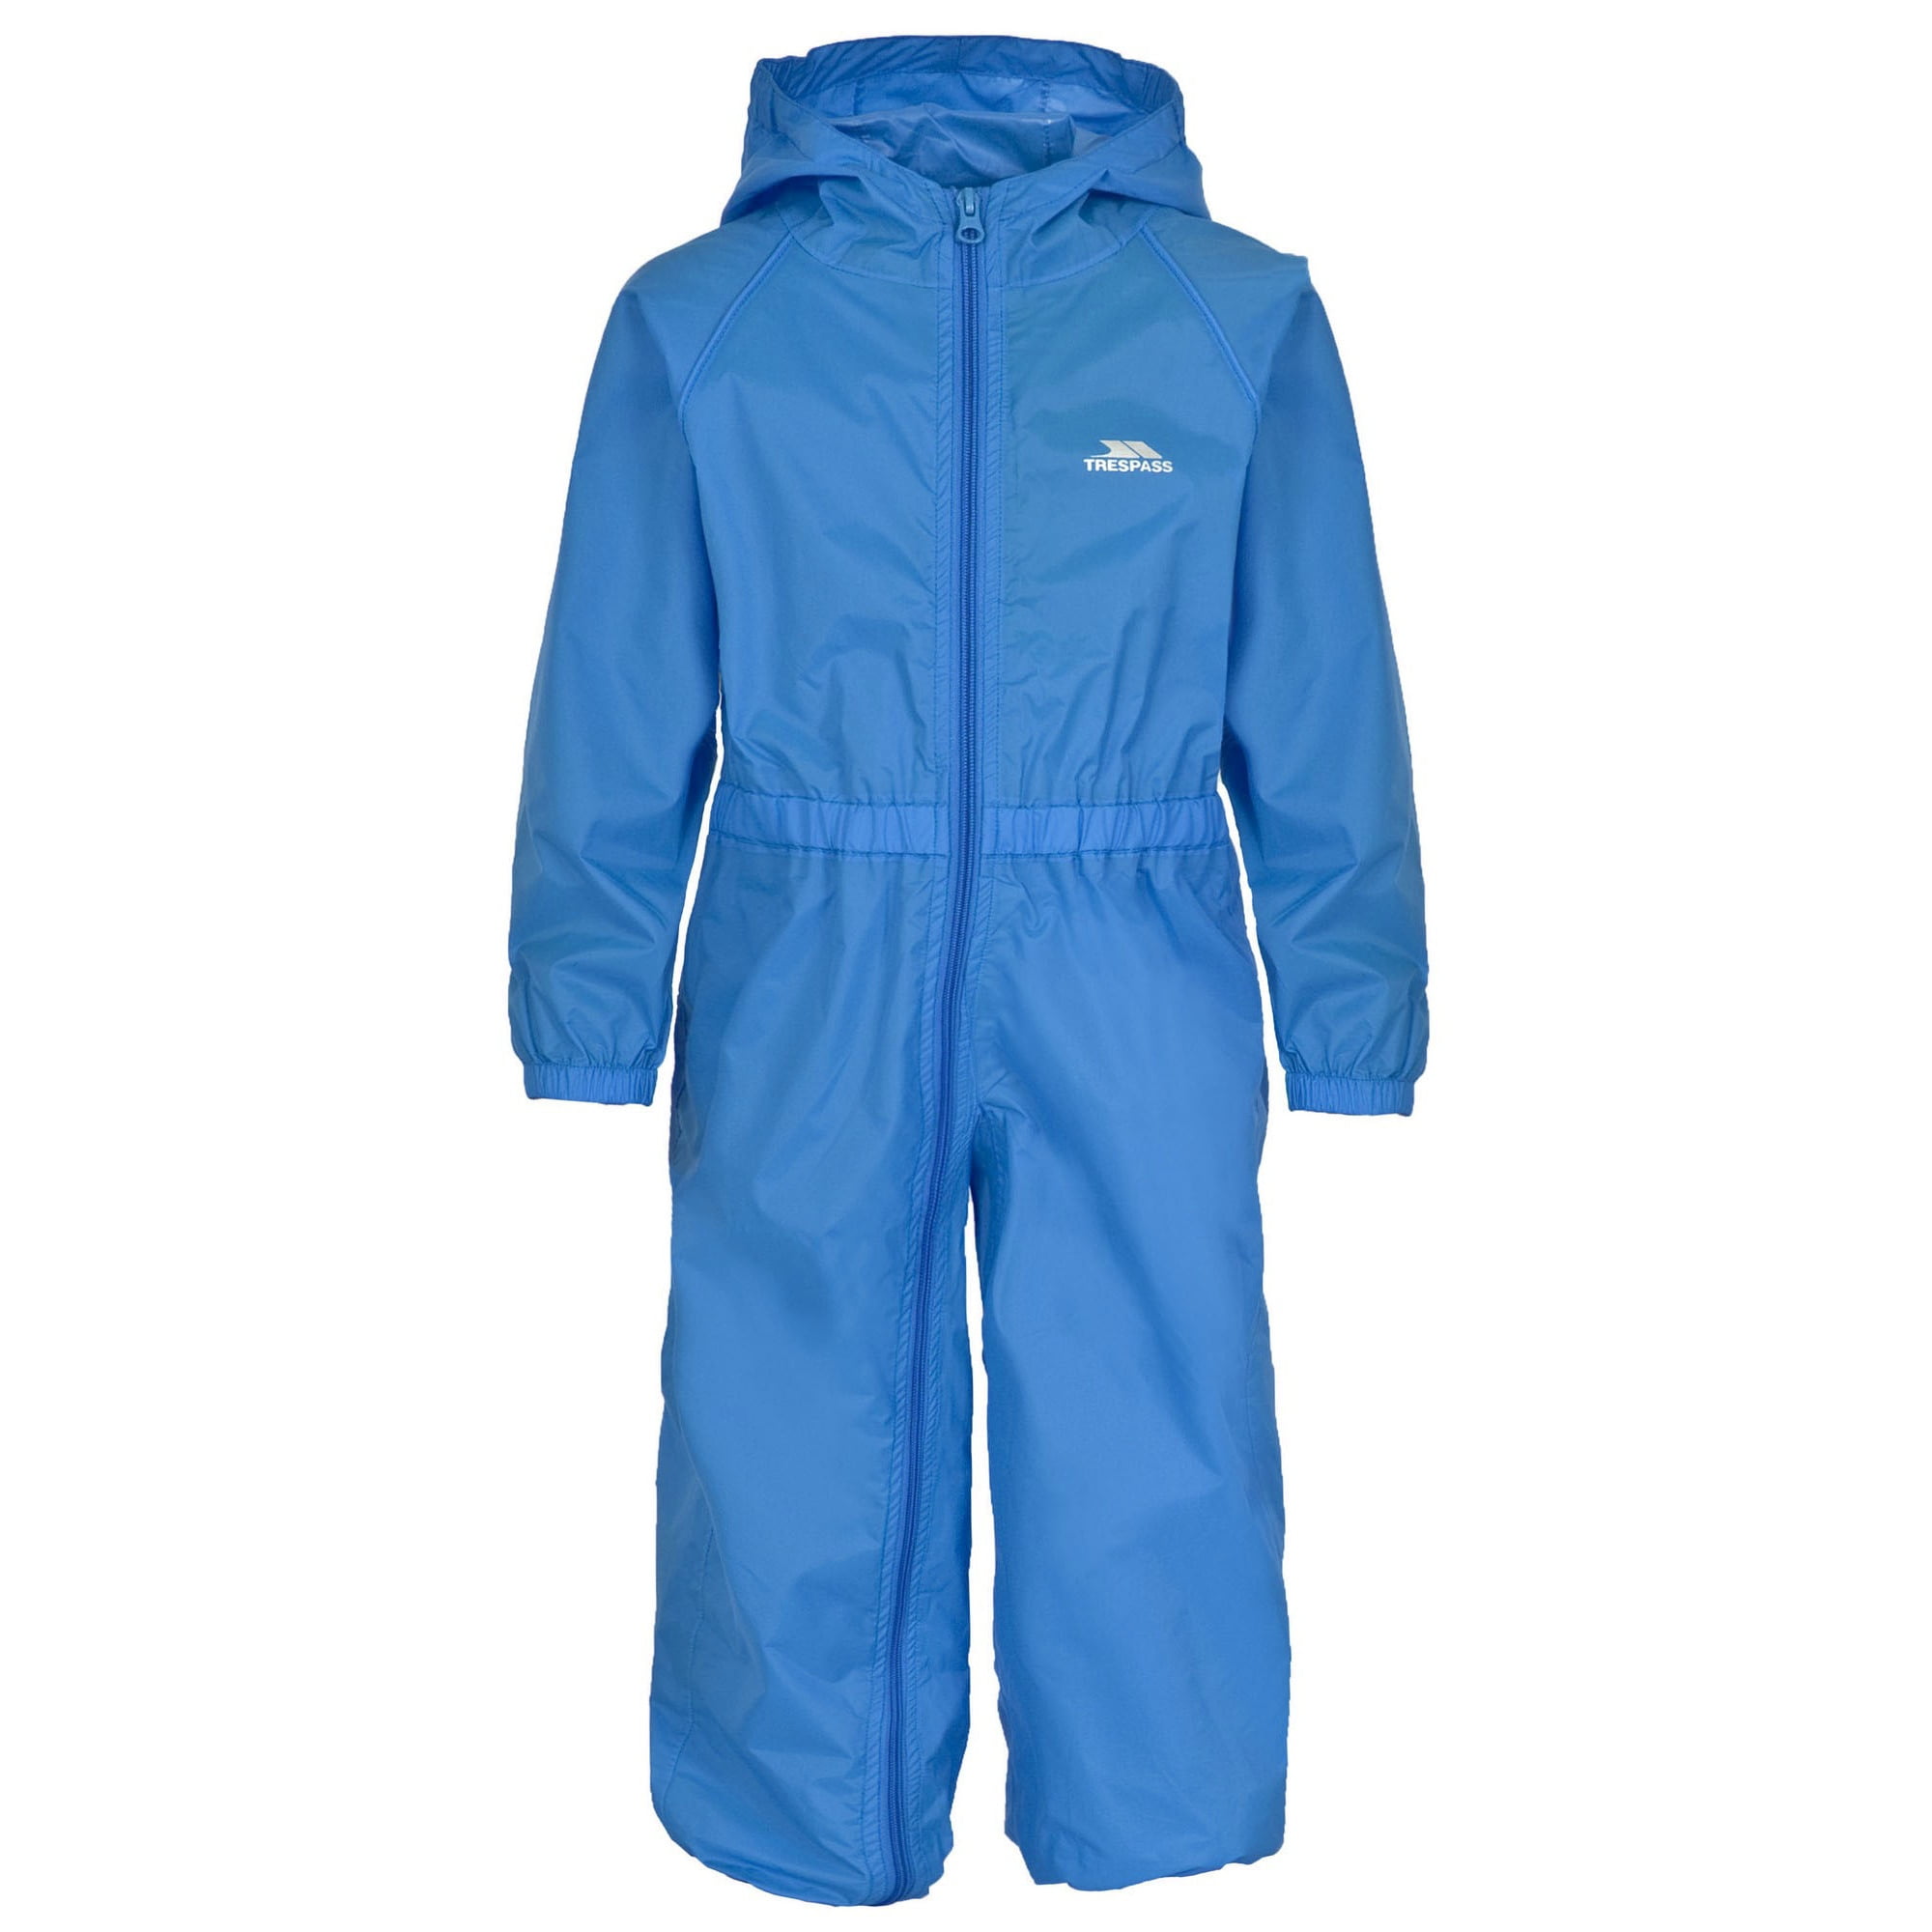 Moss, 5/6 Years Trespass Children's Button Waterproof Rain Suit with Hood